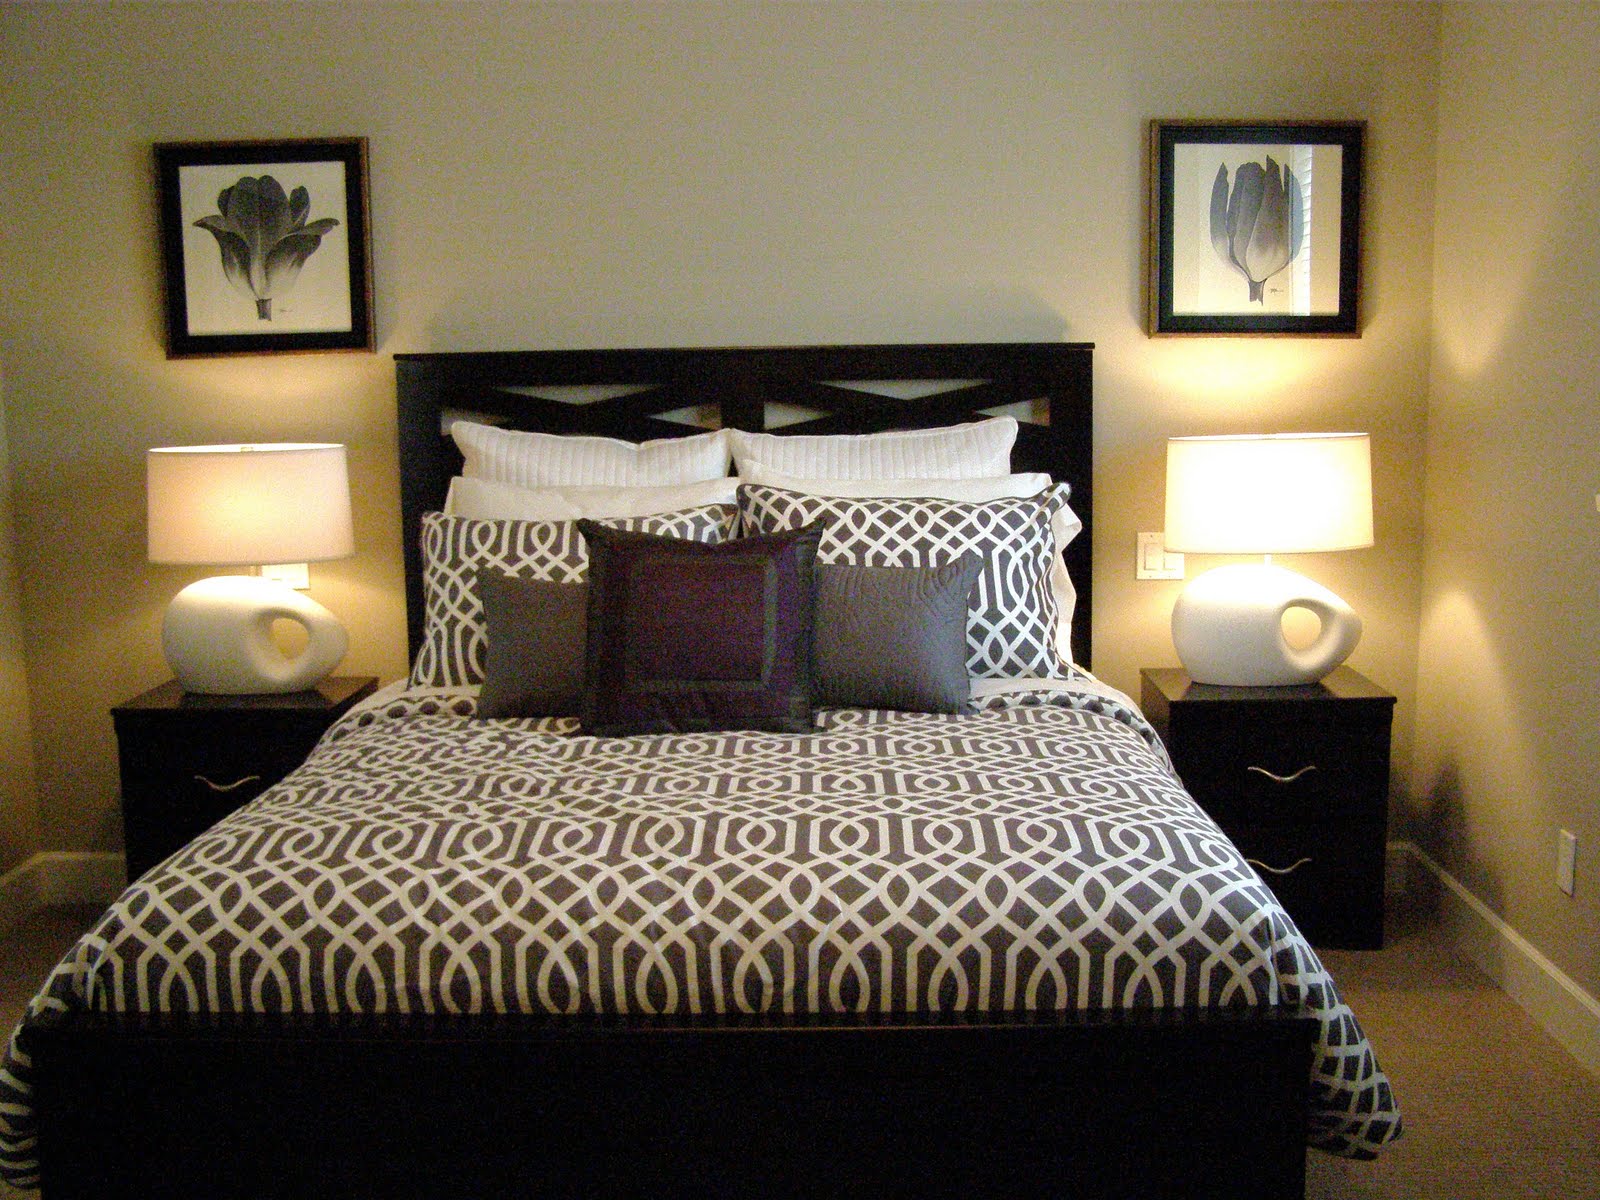 living room wallpaper ideas 2011 - www.high-definition-wallpaper.com